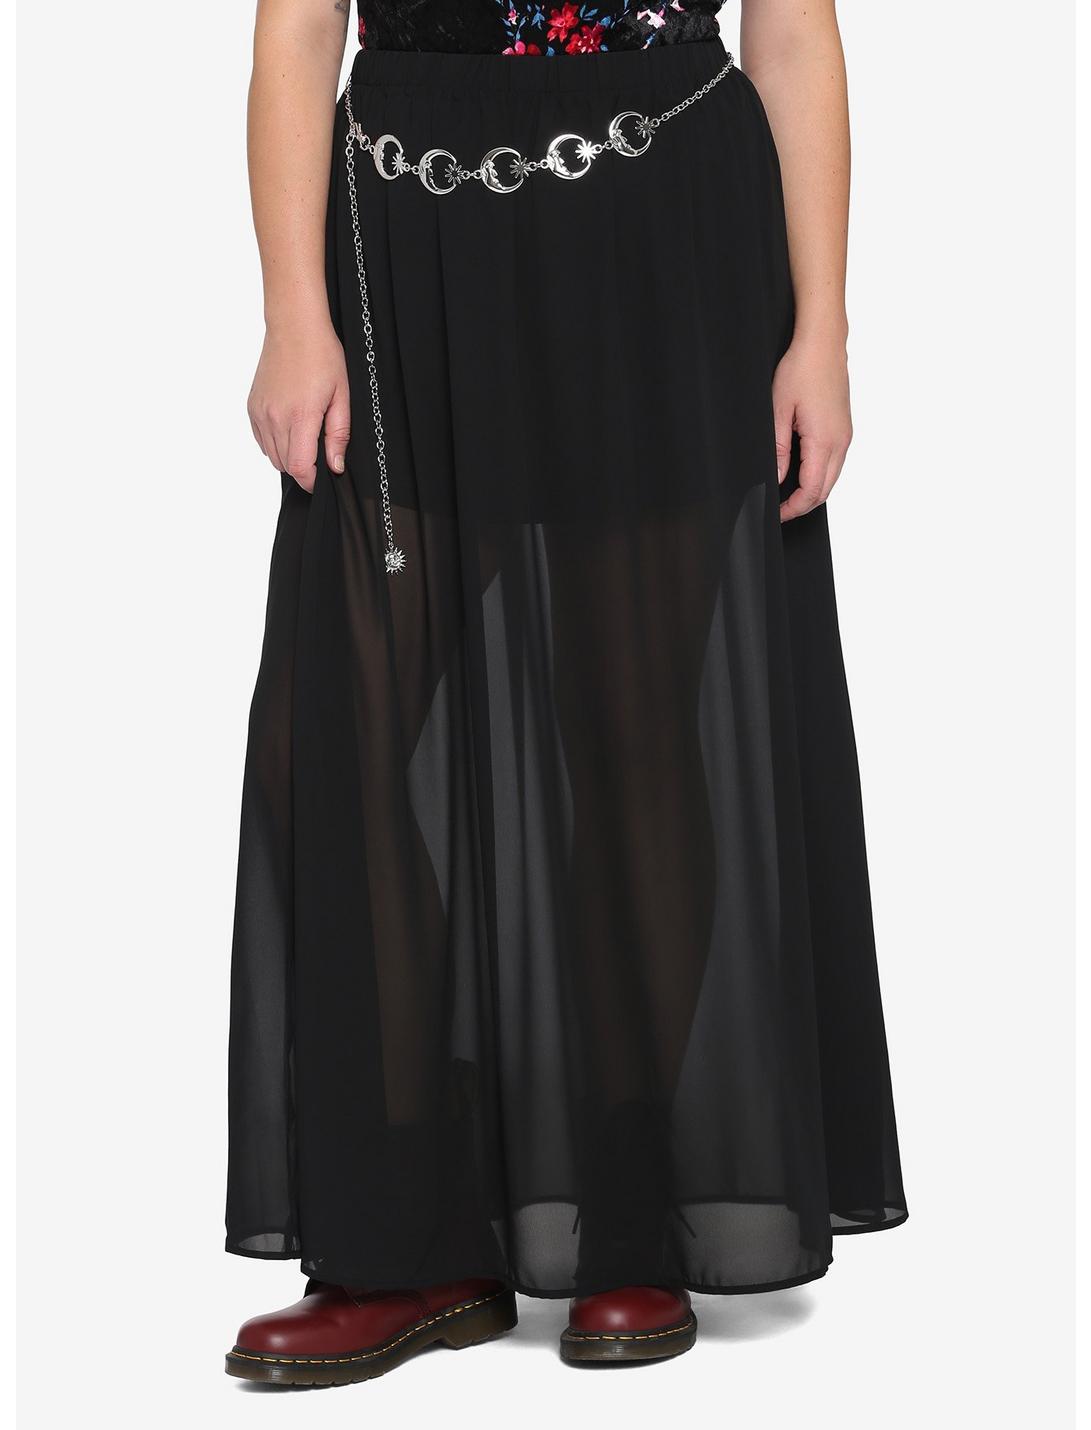 Moon Belt Black Maxi Skirt Plus Size, BLACK, hi-res